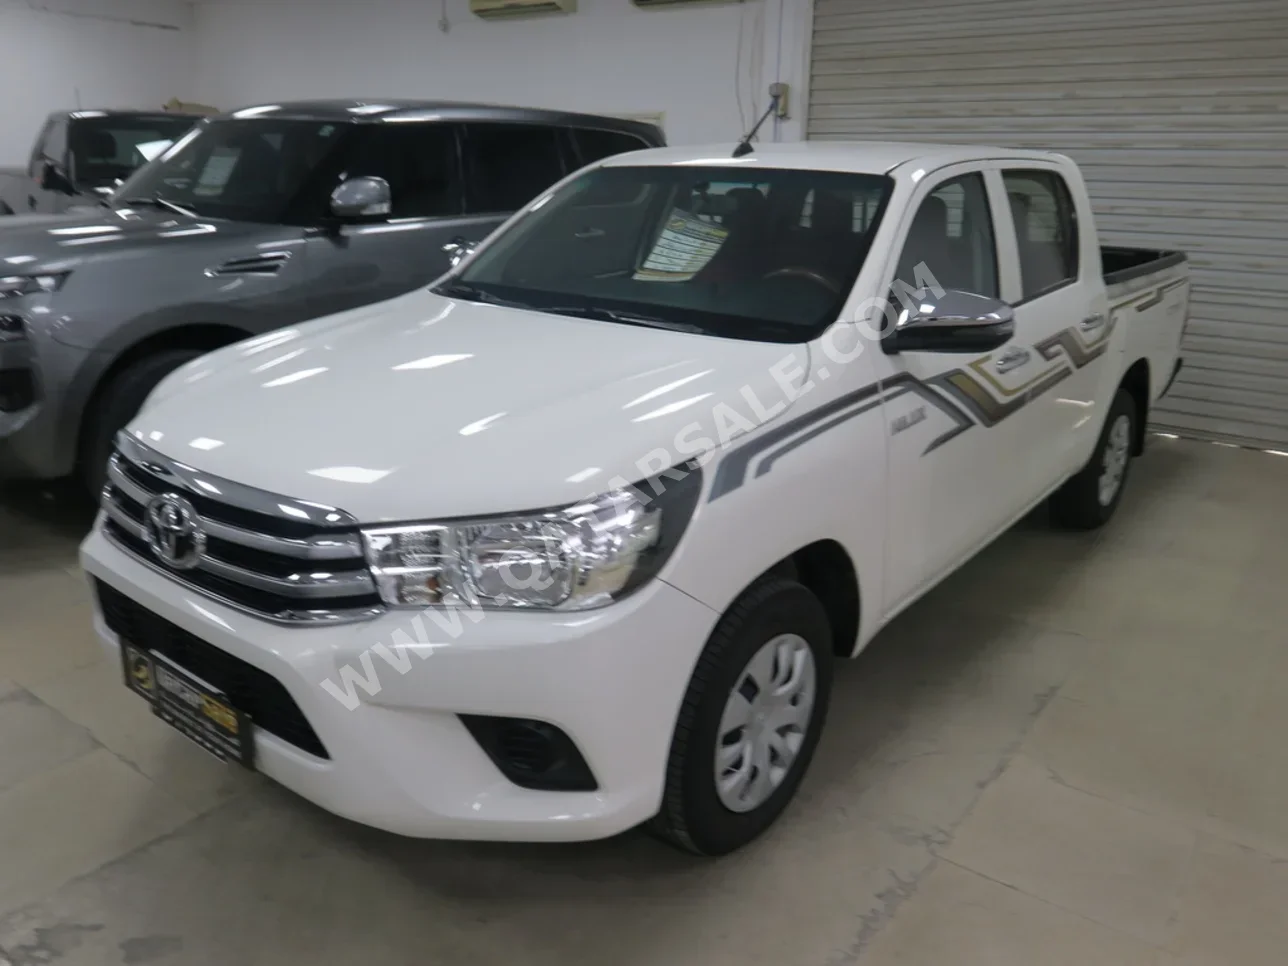 Toyota  Hilux  2018  Manual  64,000 Km  4 Cylinder  Rear Wheel Drive (RWD)  Pick Up  White